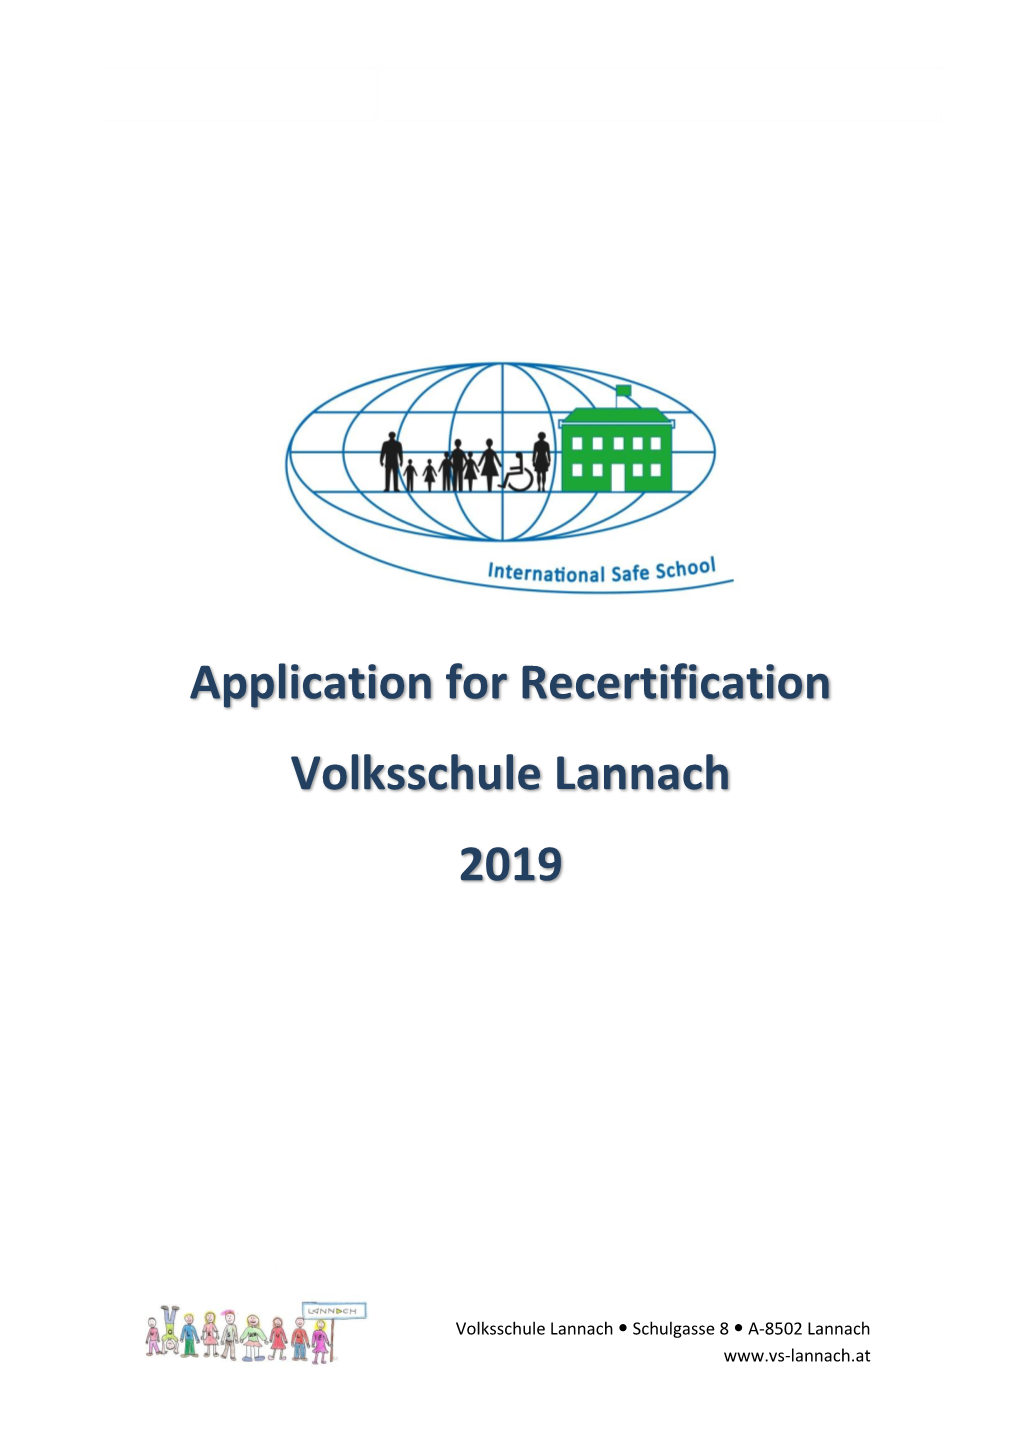 Application for Recertification Volksschule Lannach 2019